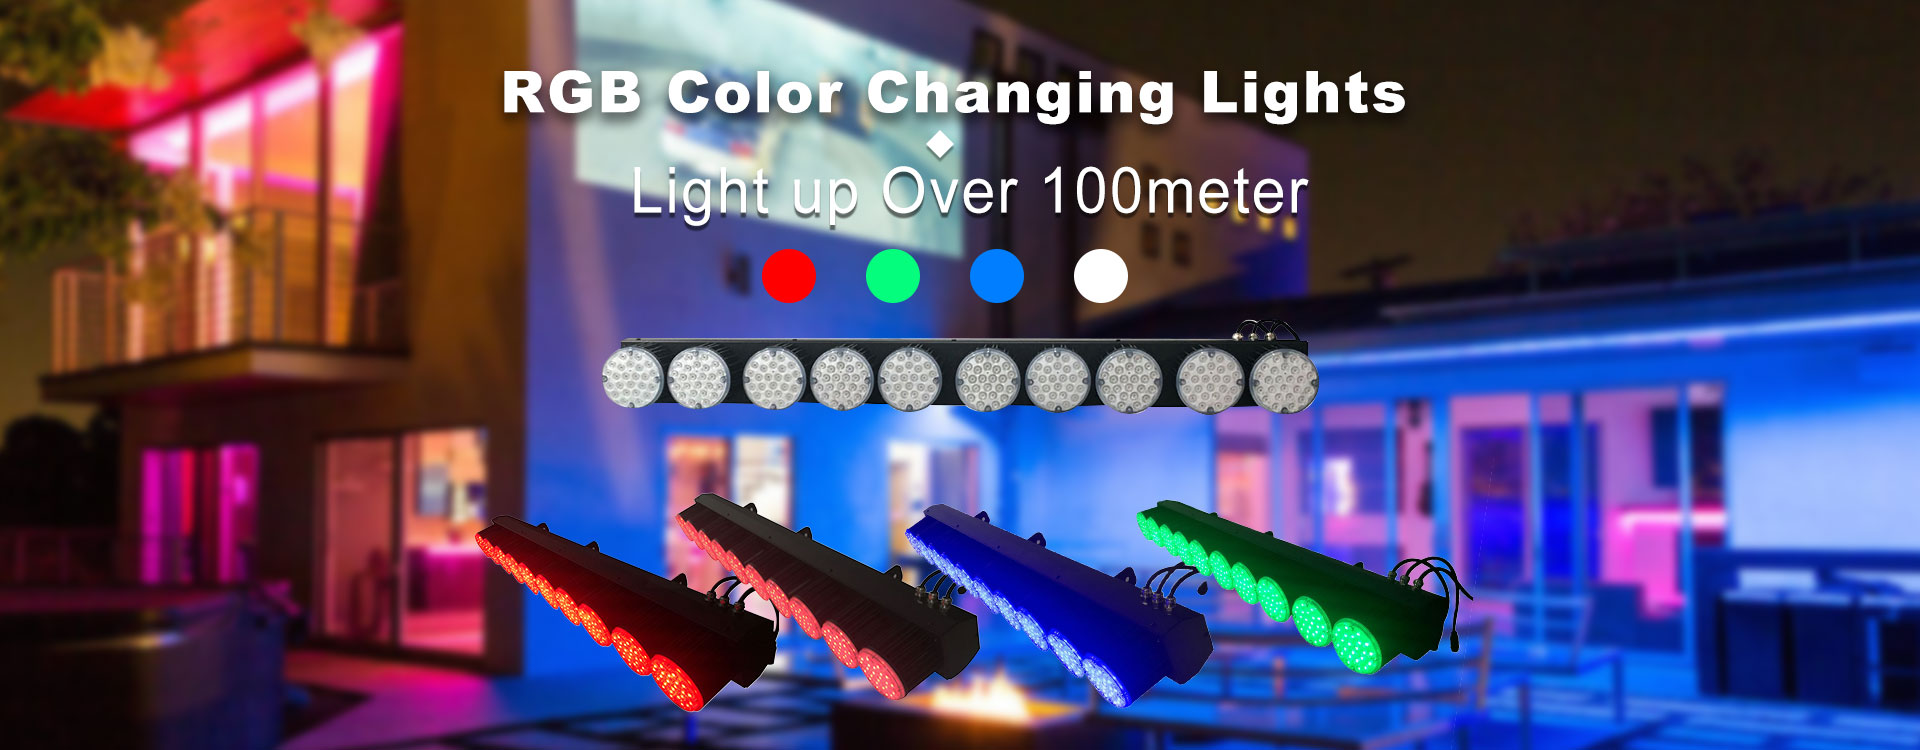 RGB Light Manufacturers 